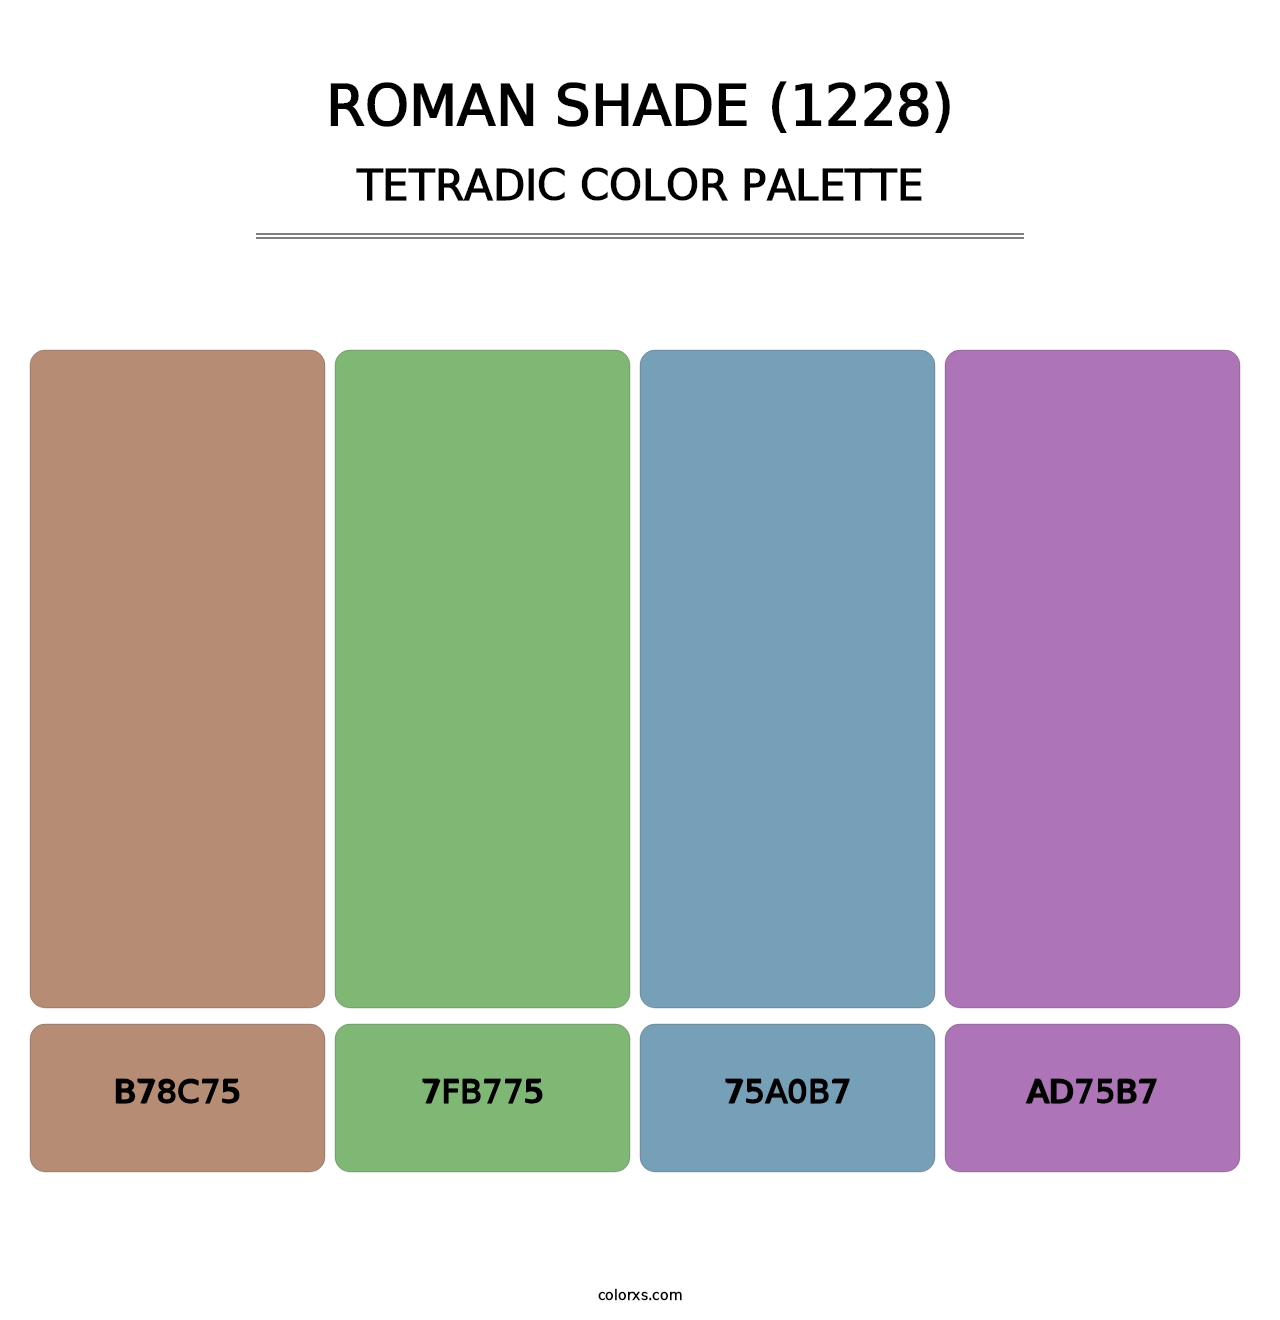 Roman Shade (1228) - Tetradic Color Palette